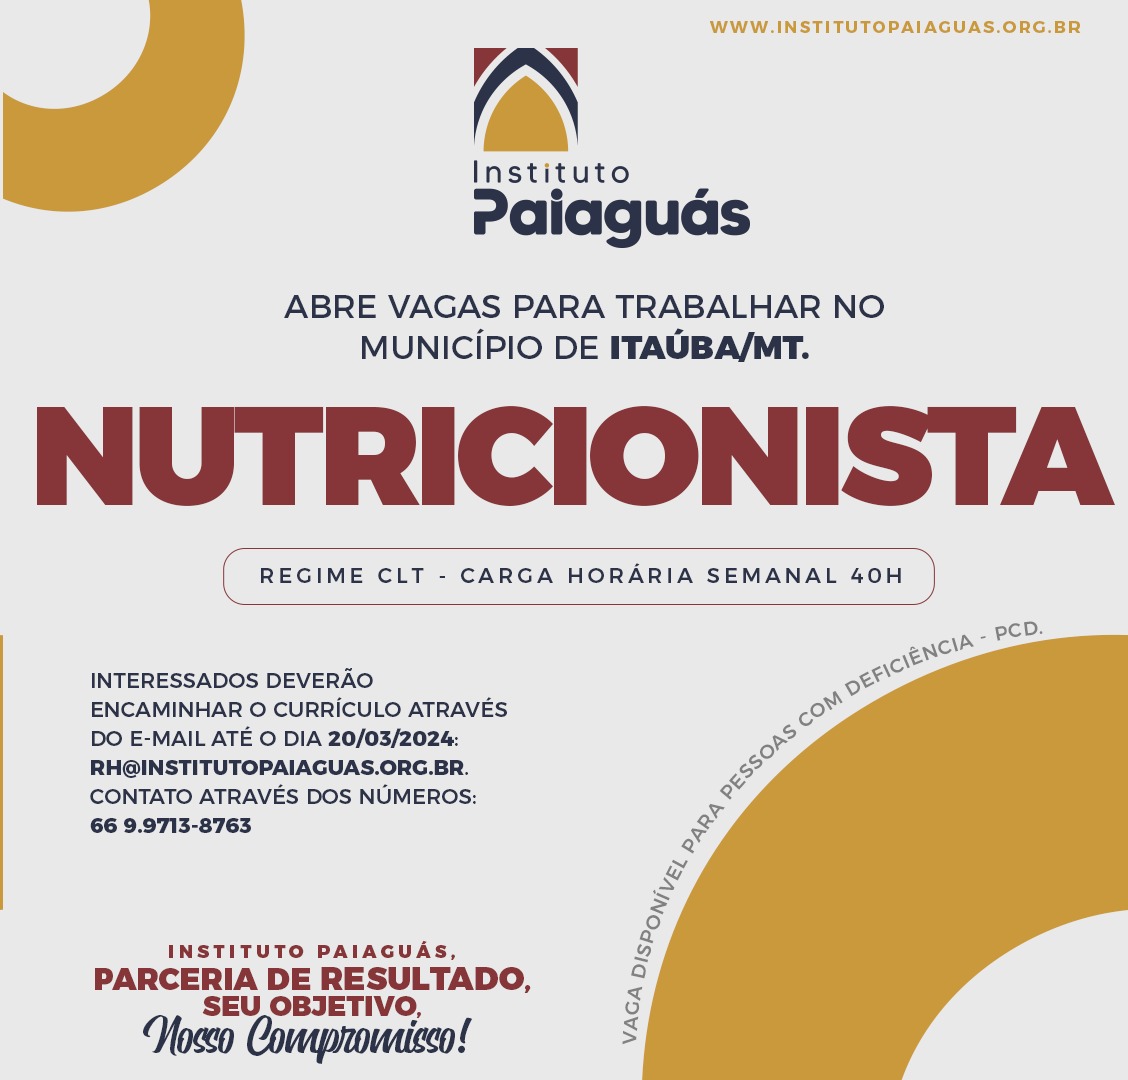 O INSTITUTO PAIAGUÁS, abre vagas para trabalhar no município de Itaúba/MT Nutricionista.